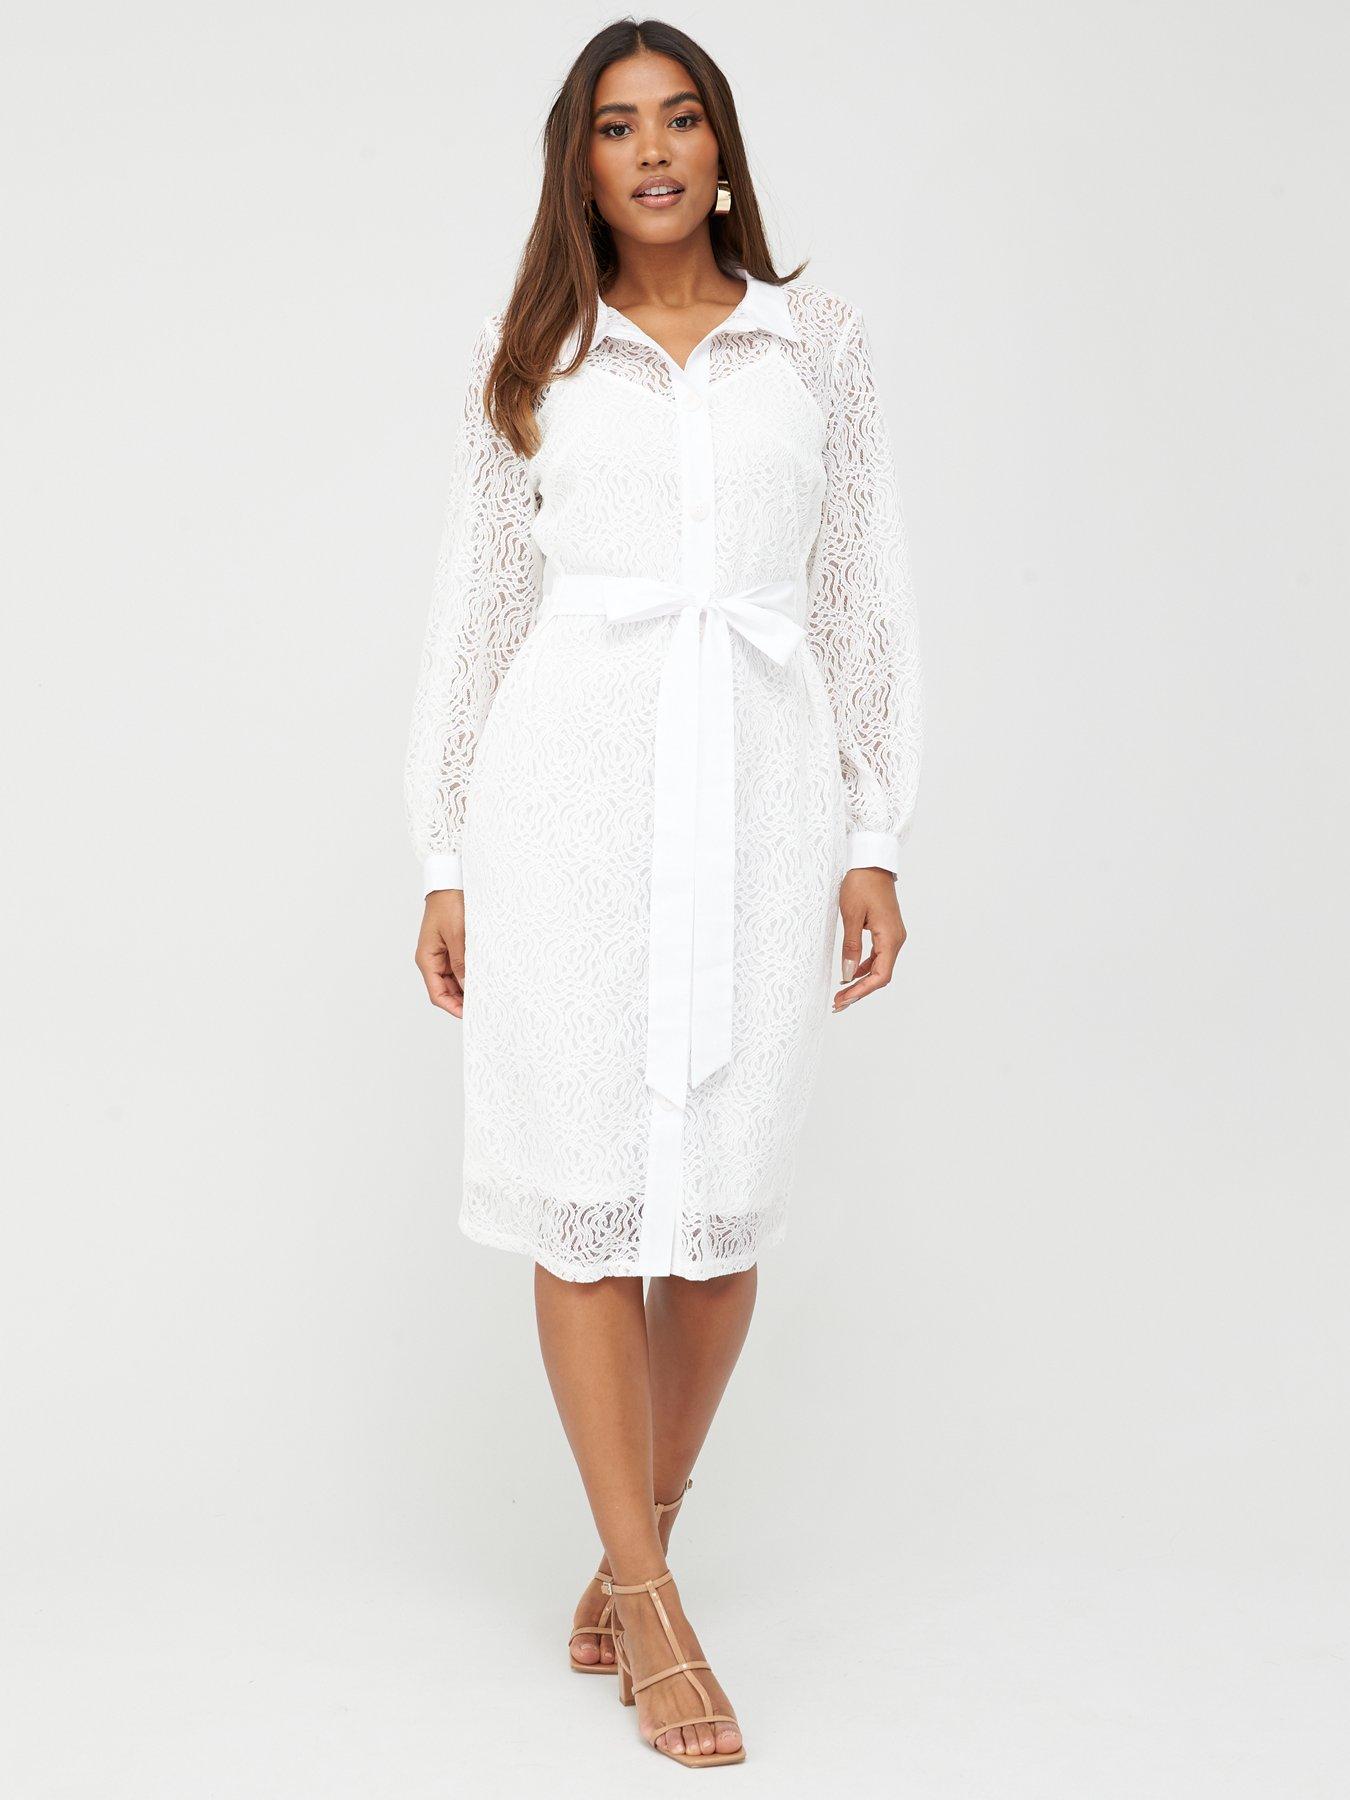 white lace summer dress uk